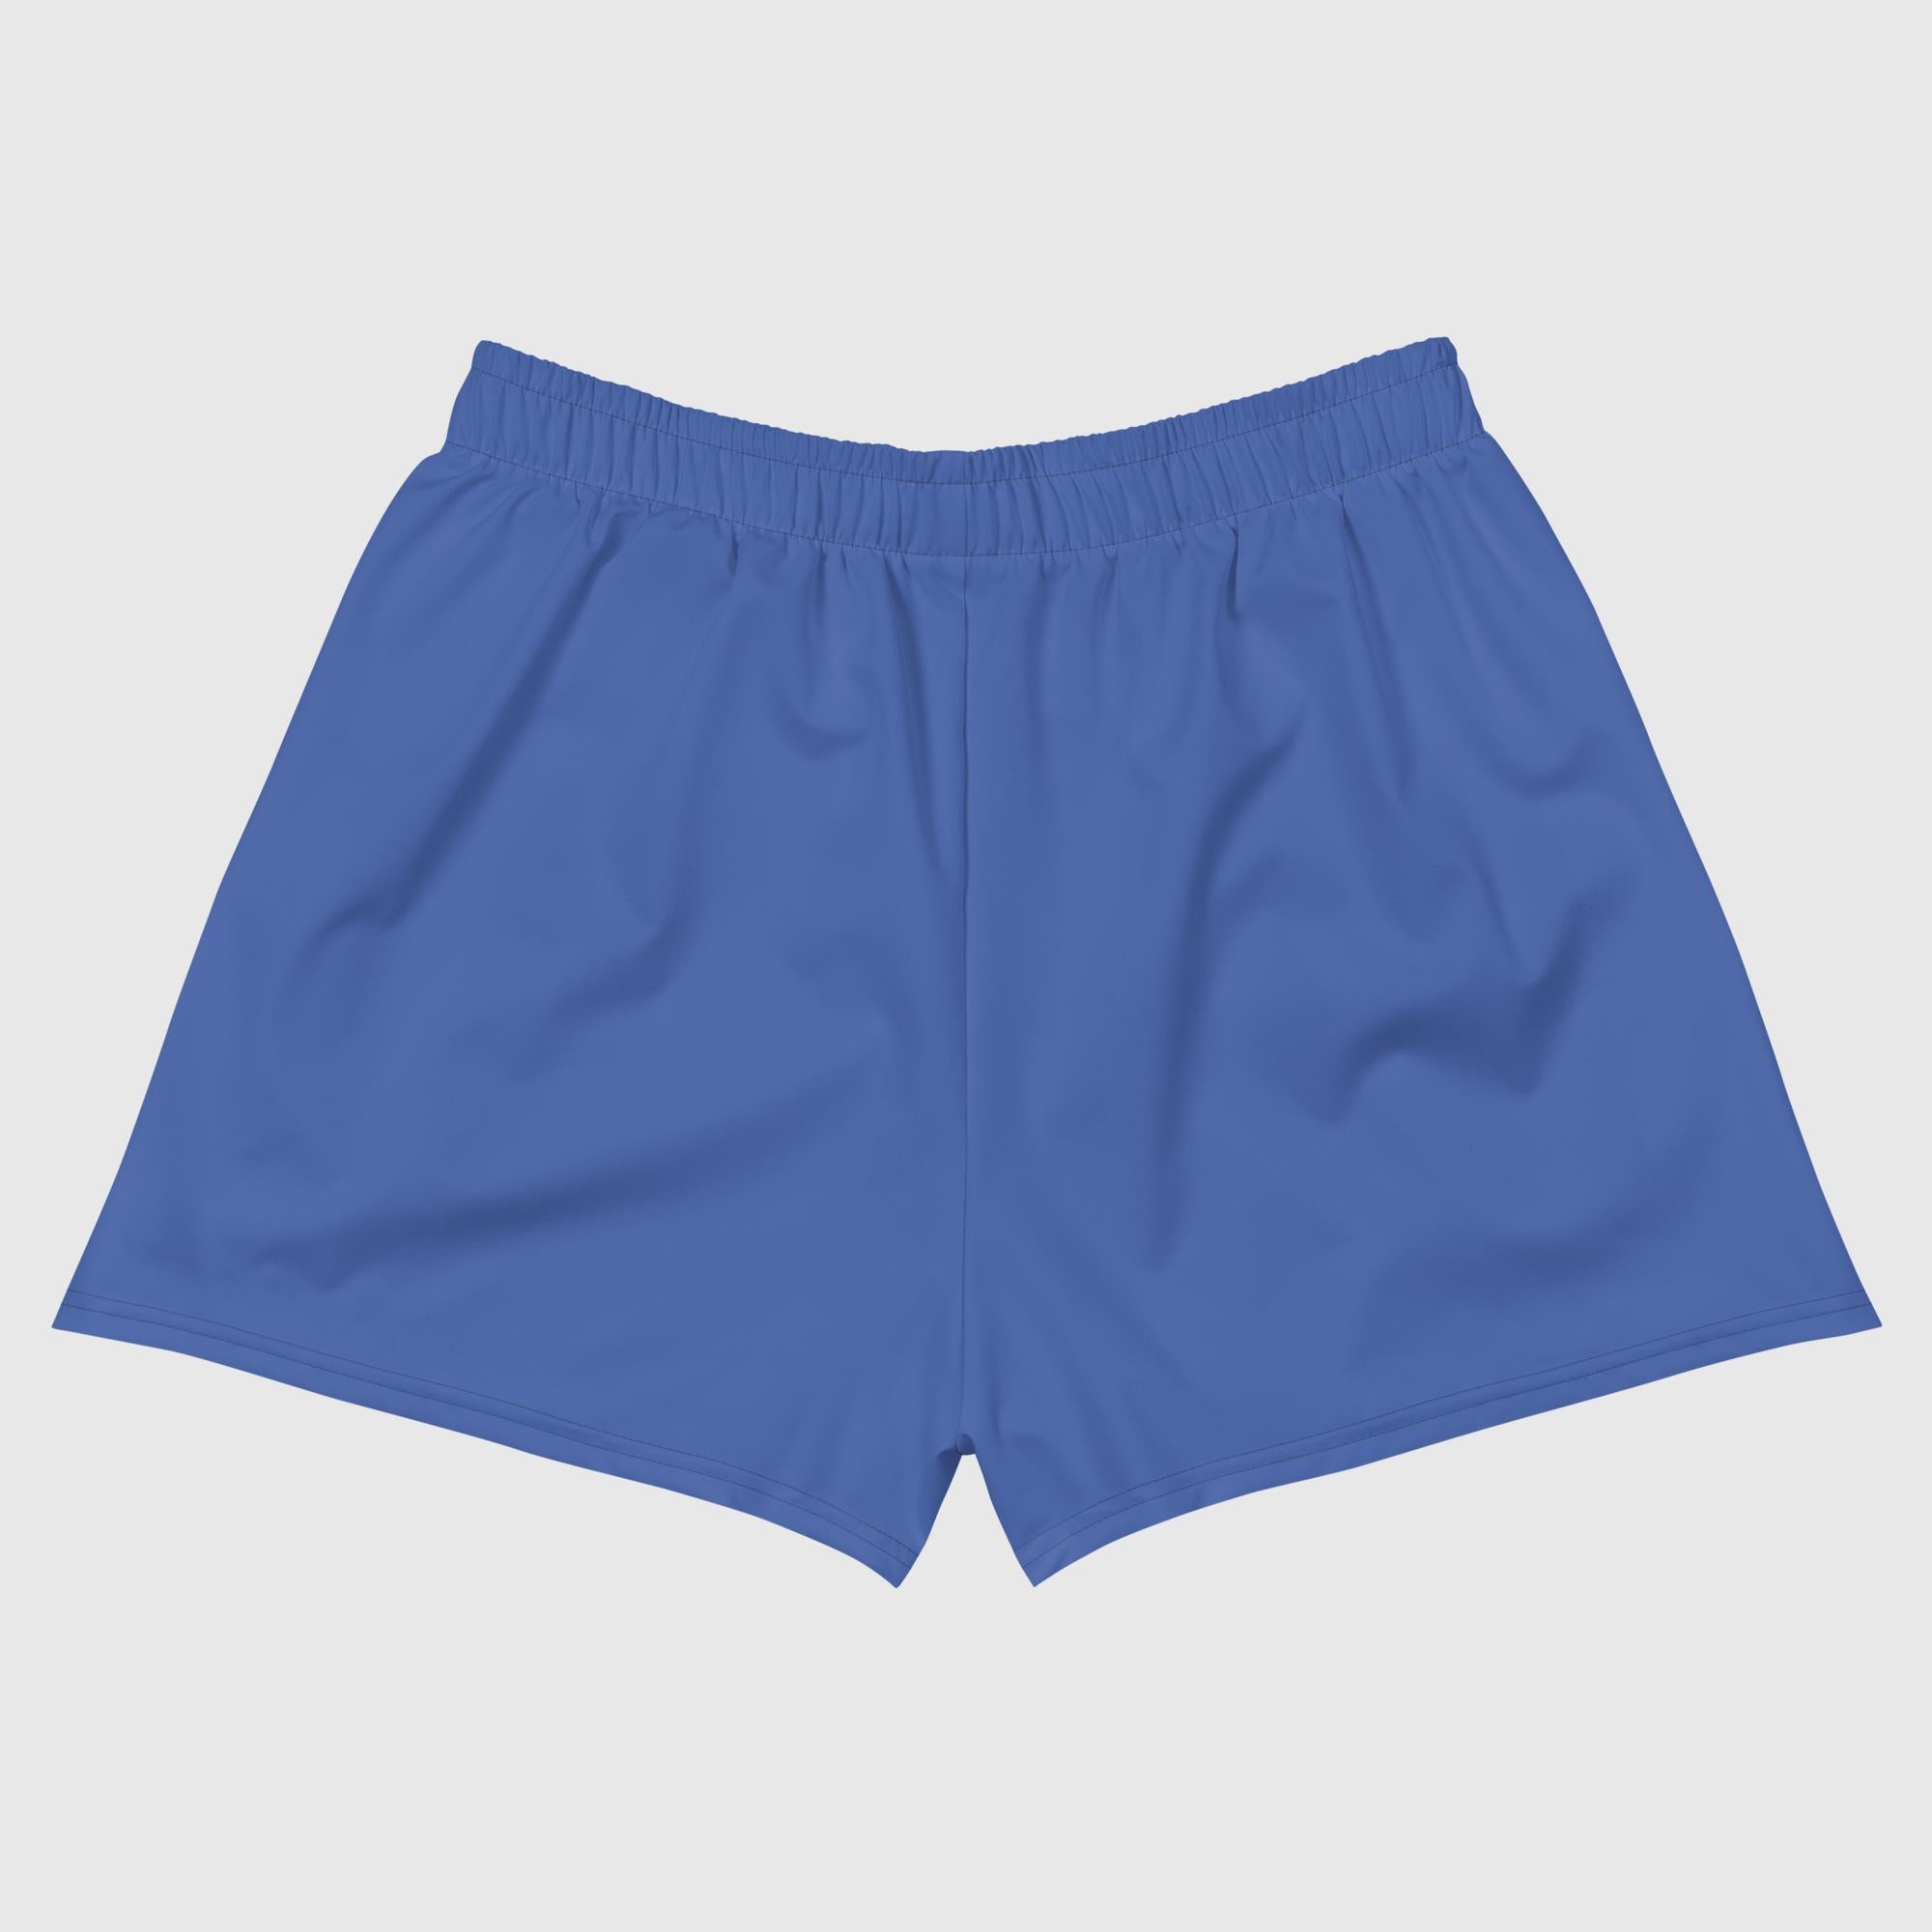 Pantalón corto deportivo para mujer - Mariner Blue